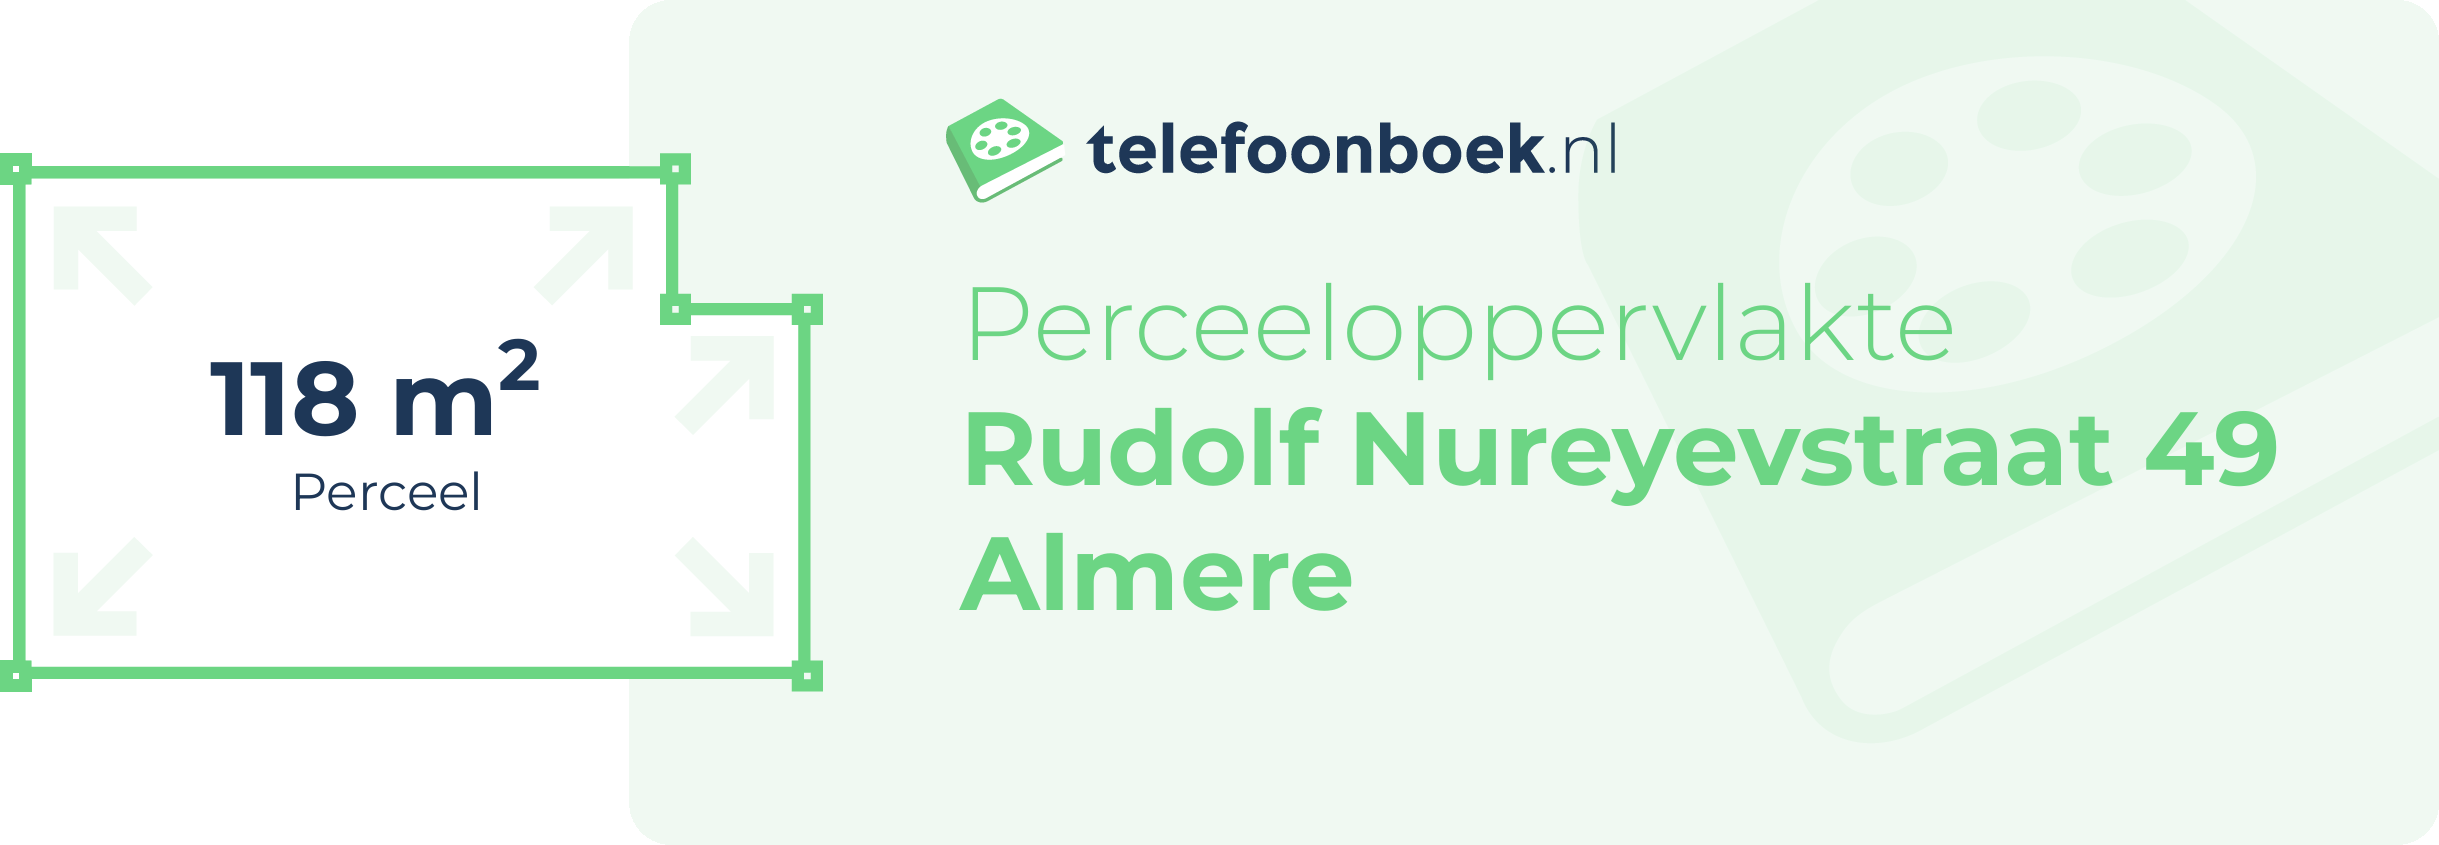 Perceeloppervlakte Rudolf Nureyevstraat 49 Almere